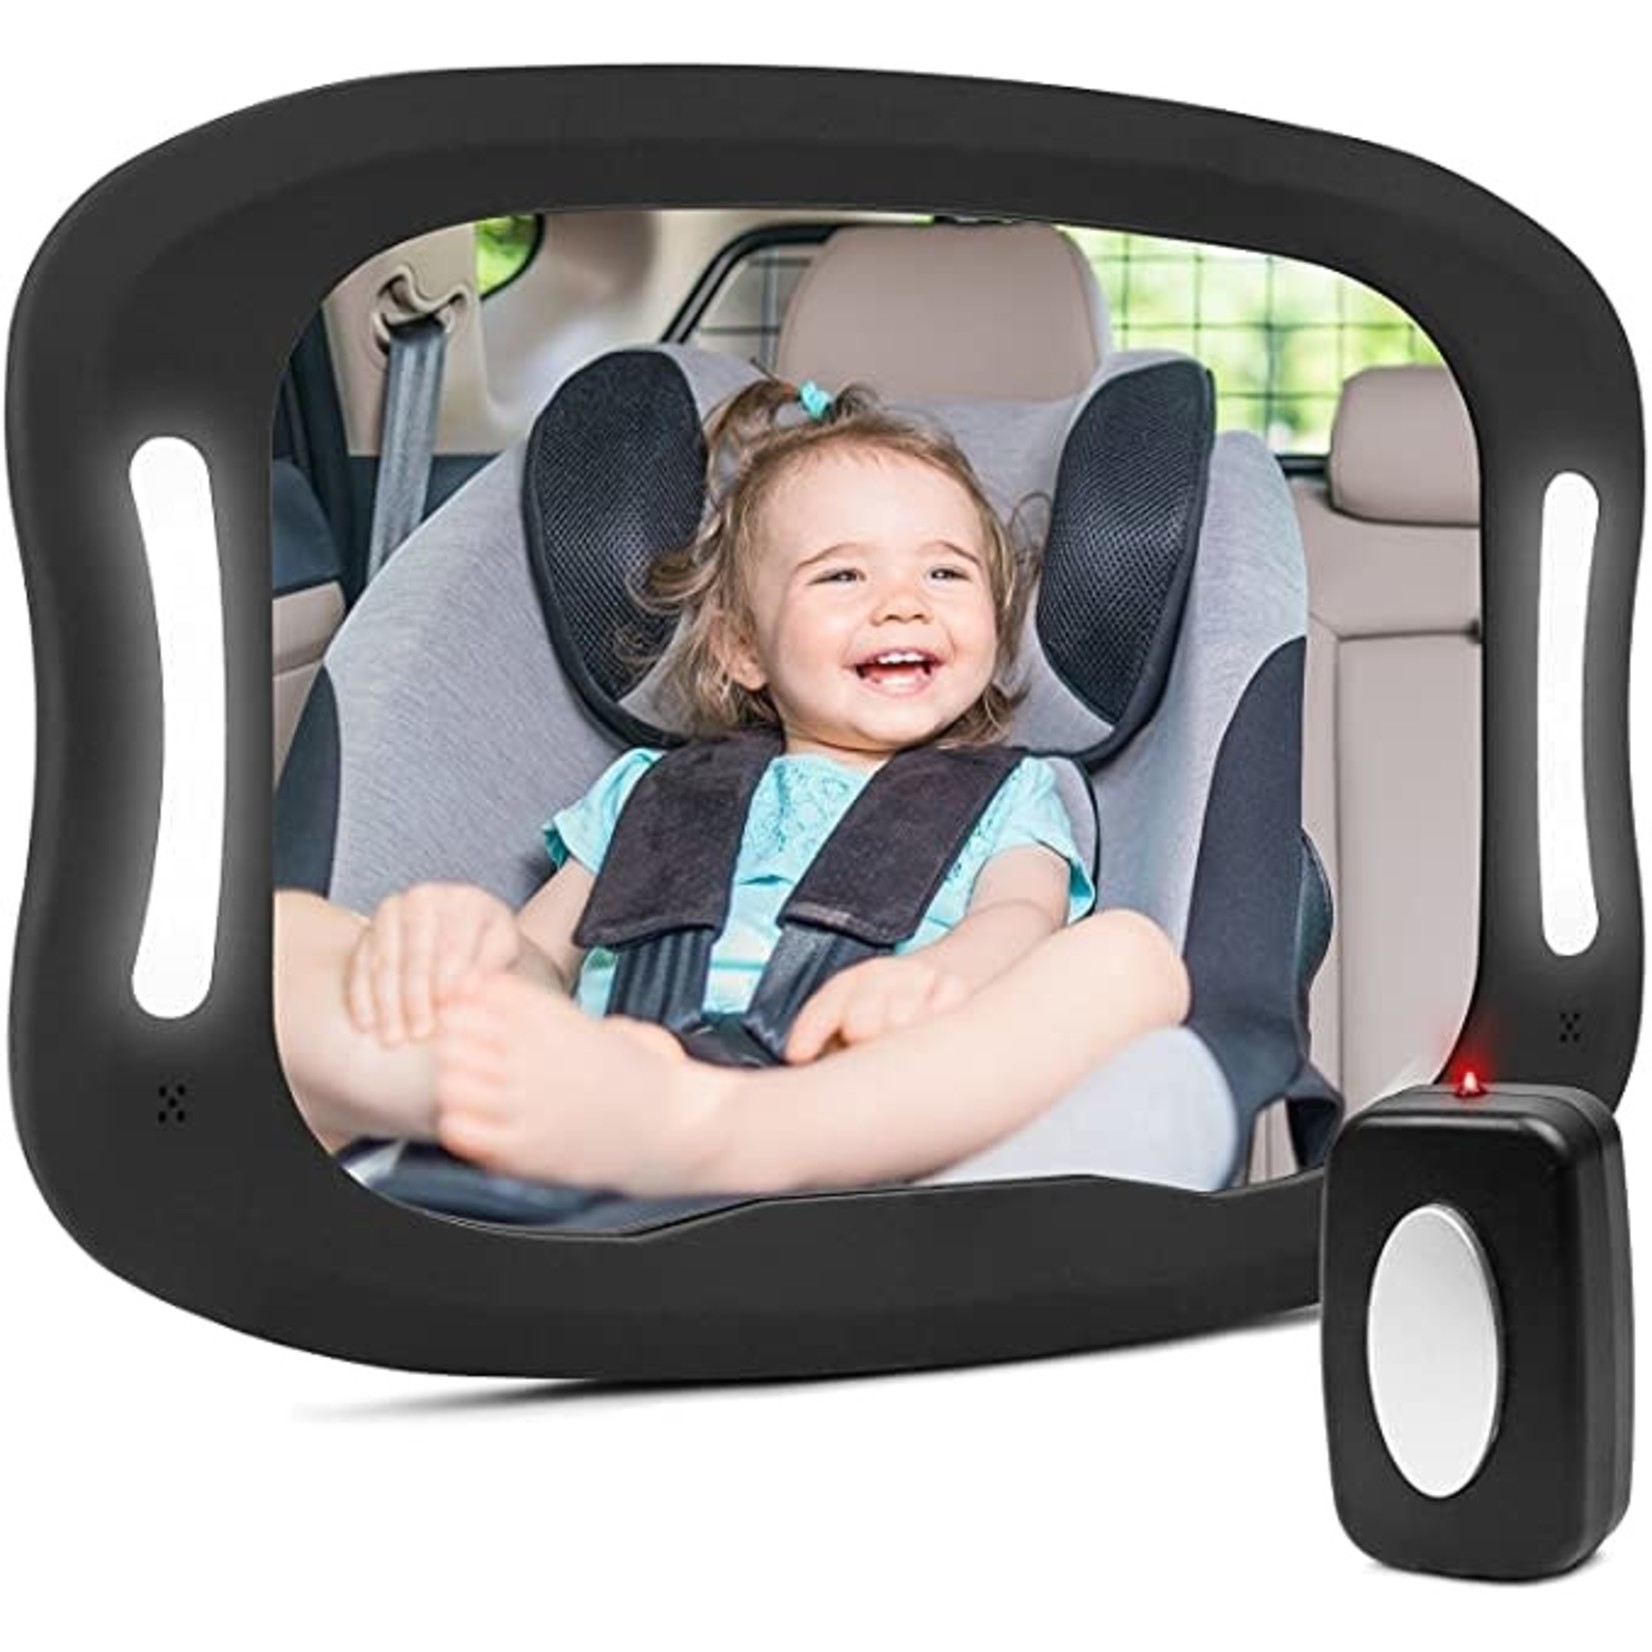 BabyDan car mirror with Led lighting - Auto spiegel